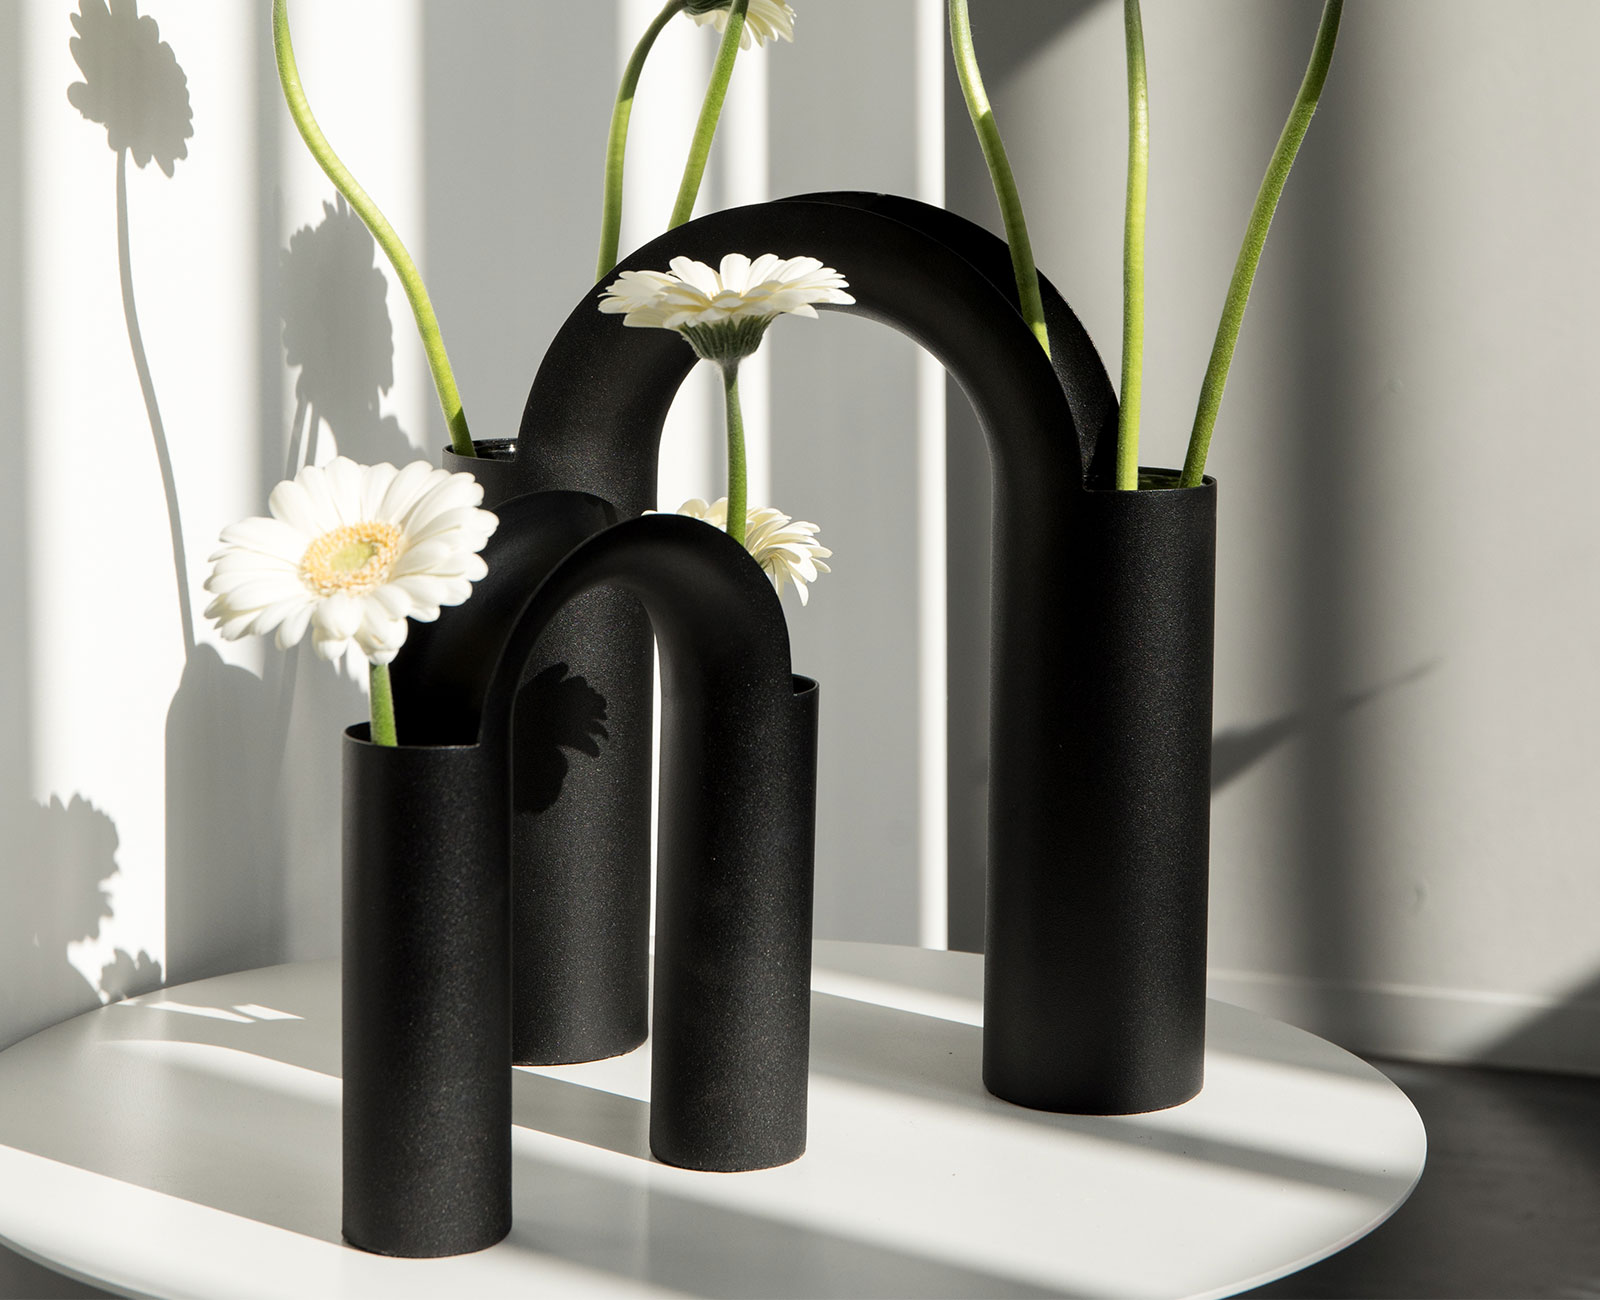 Bridge vase small and medium with flowers